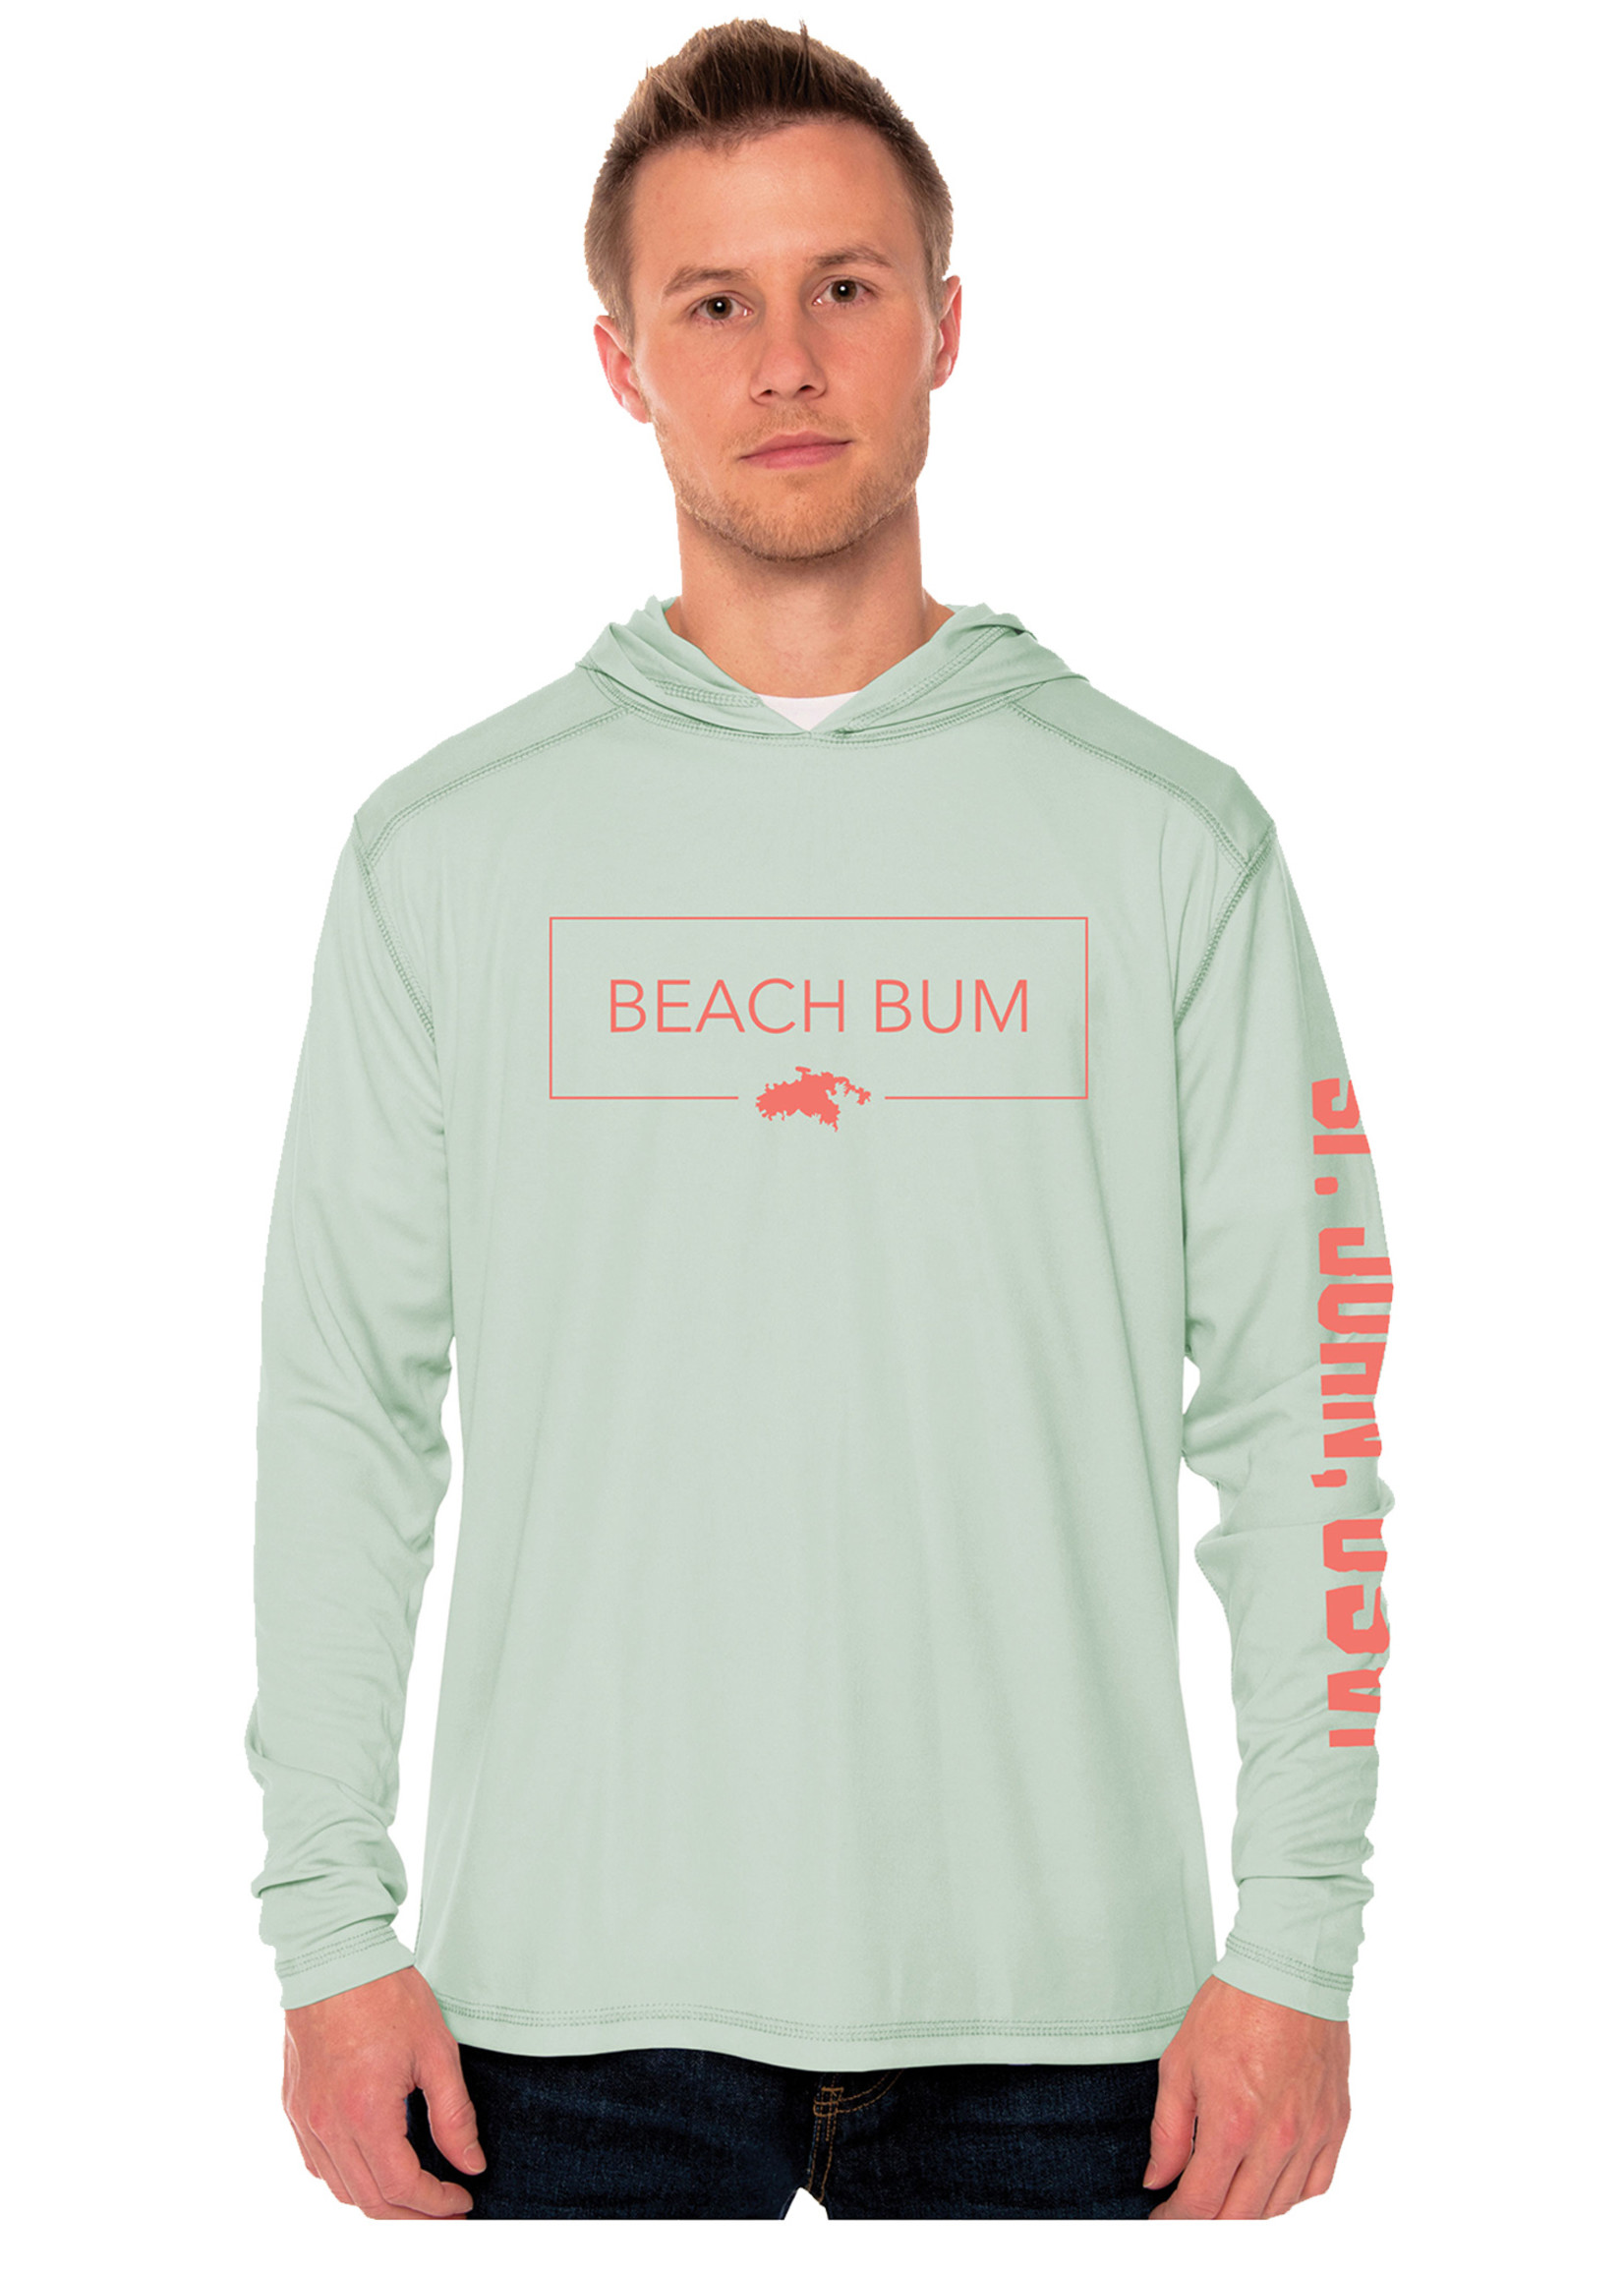 St. John Beach Bum Men's SPF50 Hoody - Classy Bum